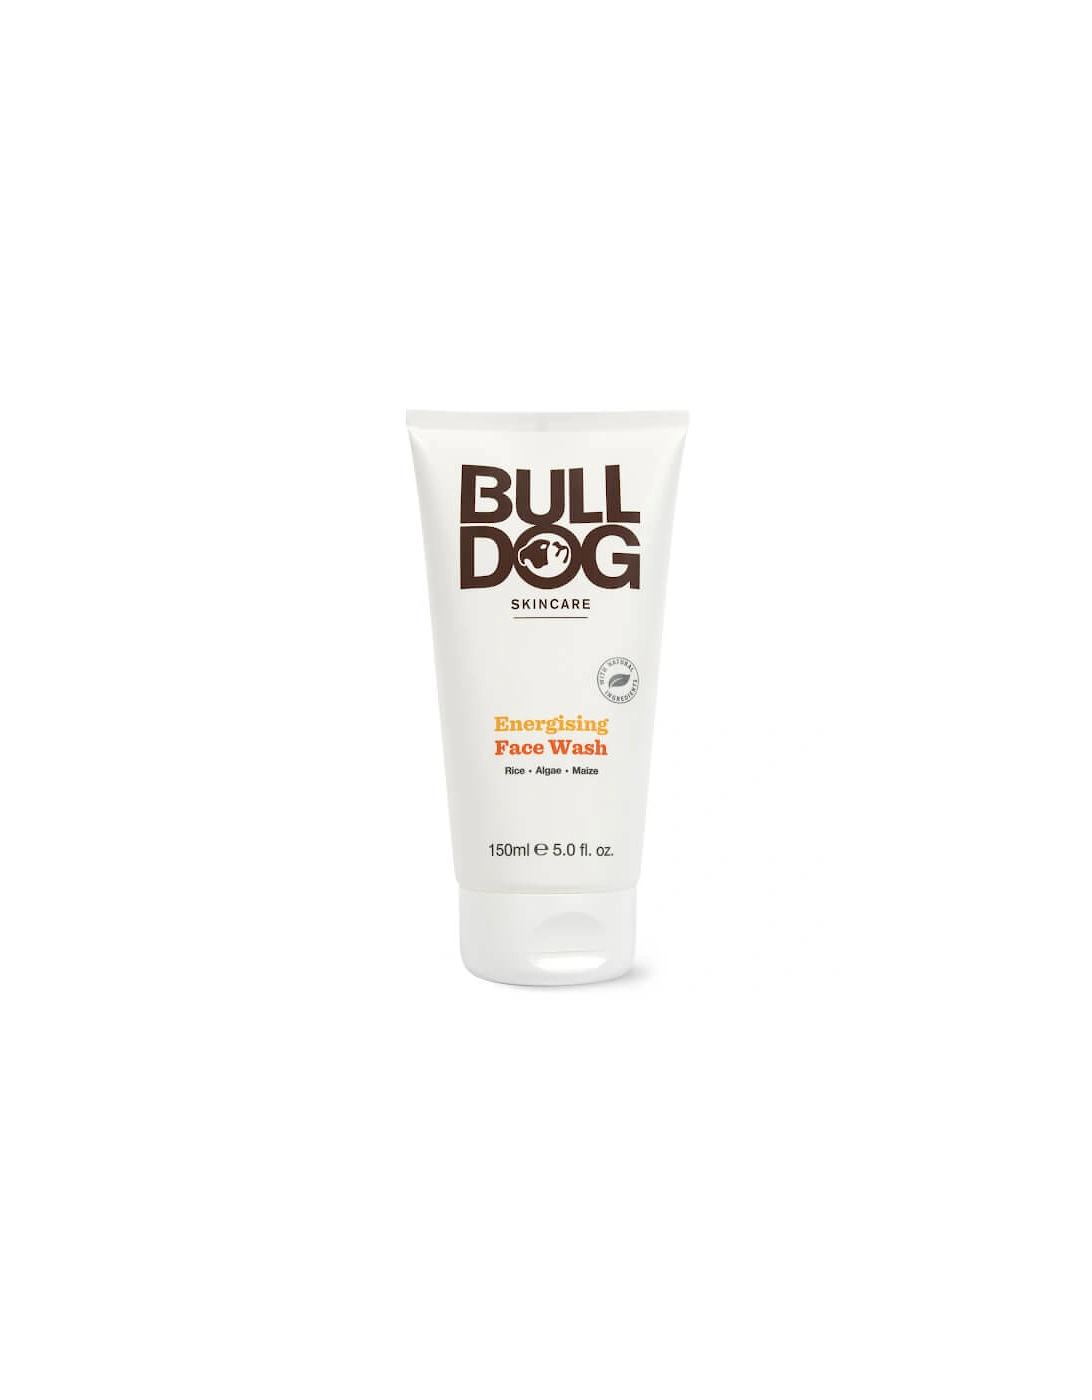 Energising Face Wash 150ml - Skincare for Men - Energising Face Wash 150ml - Seversk-7 - Energising Face Wash 150ml - Bulldog, 2 of 1